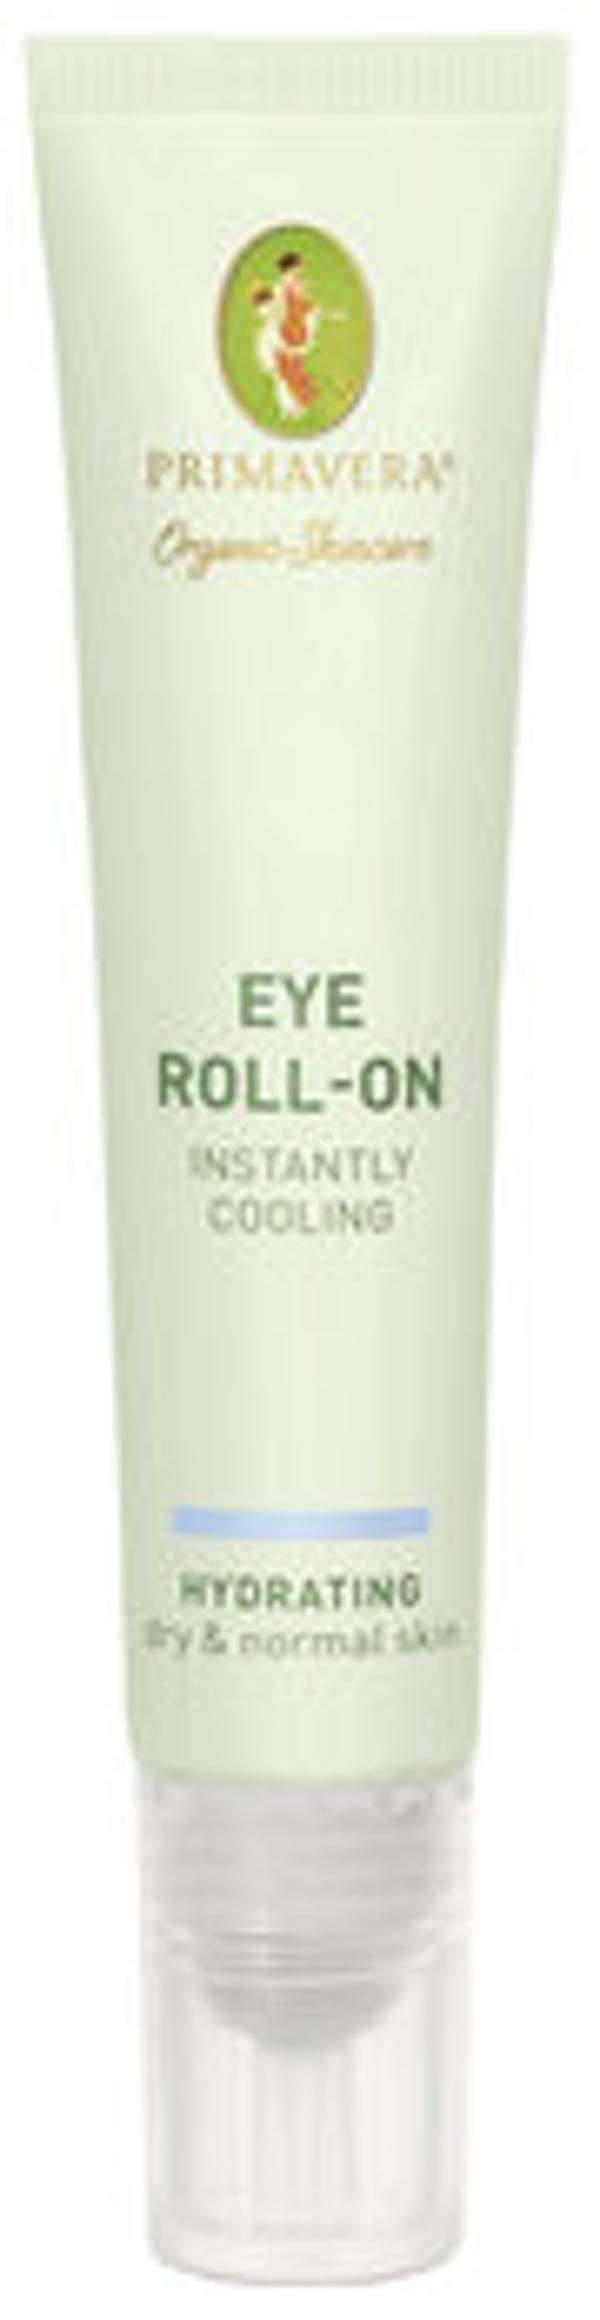 Produktfoto zu Eye Roll On Instantly Cooling, 12 ml